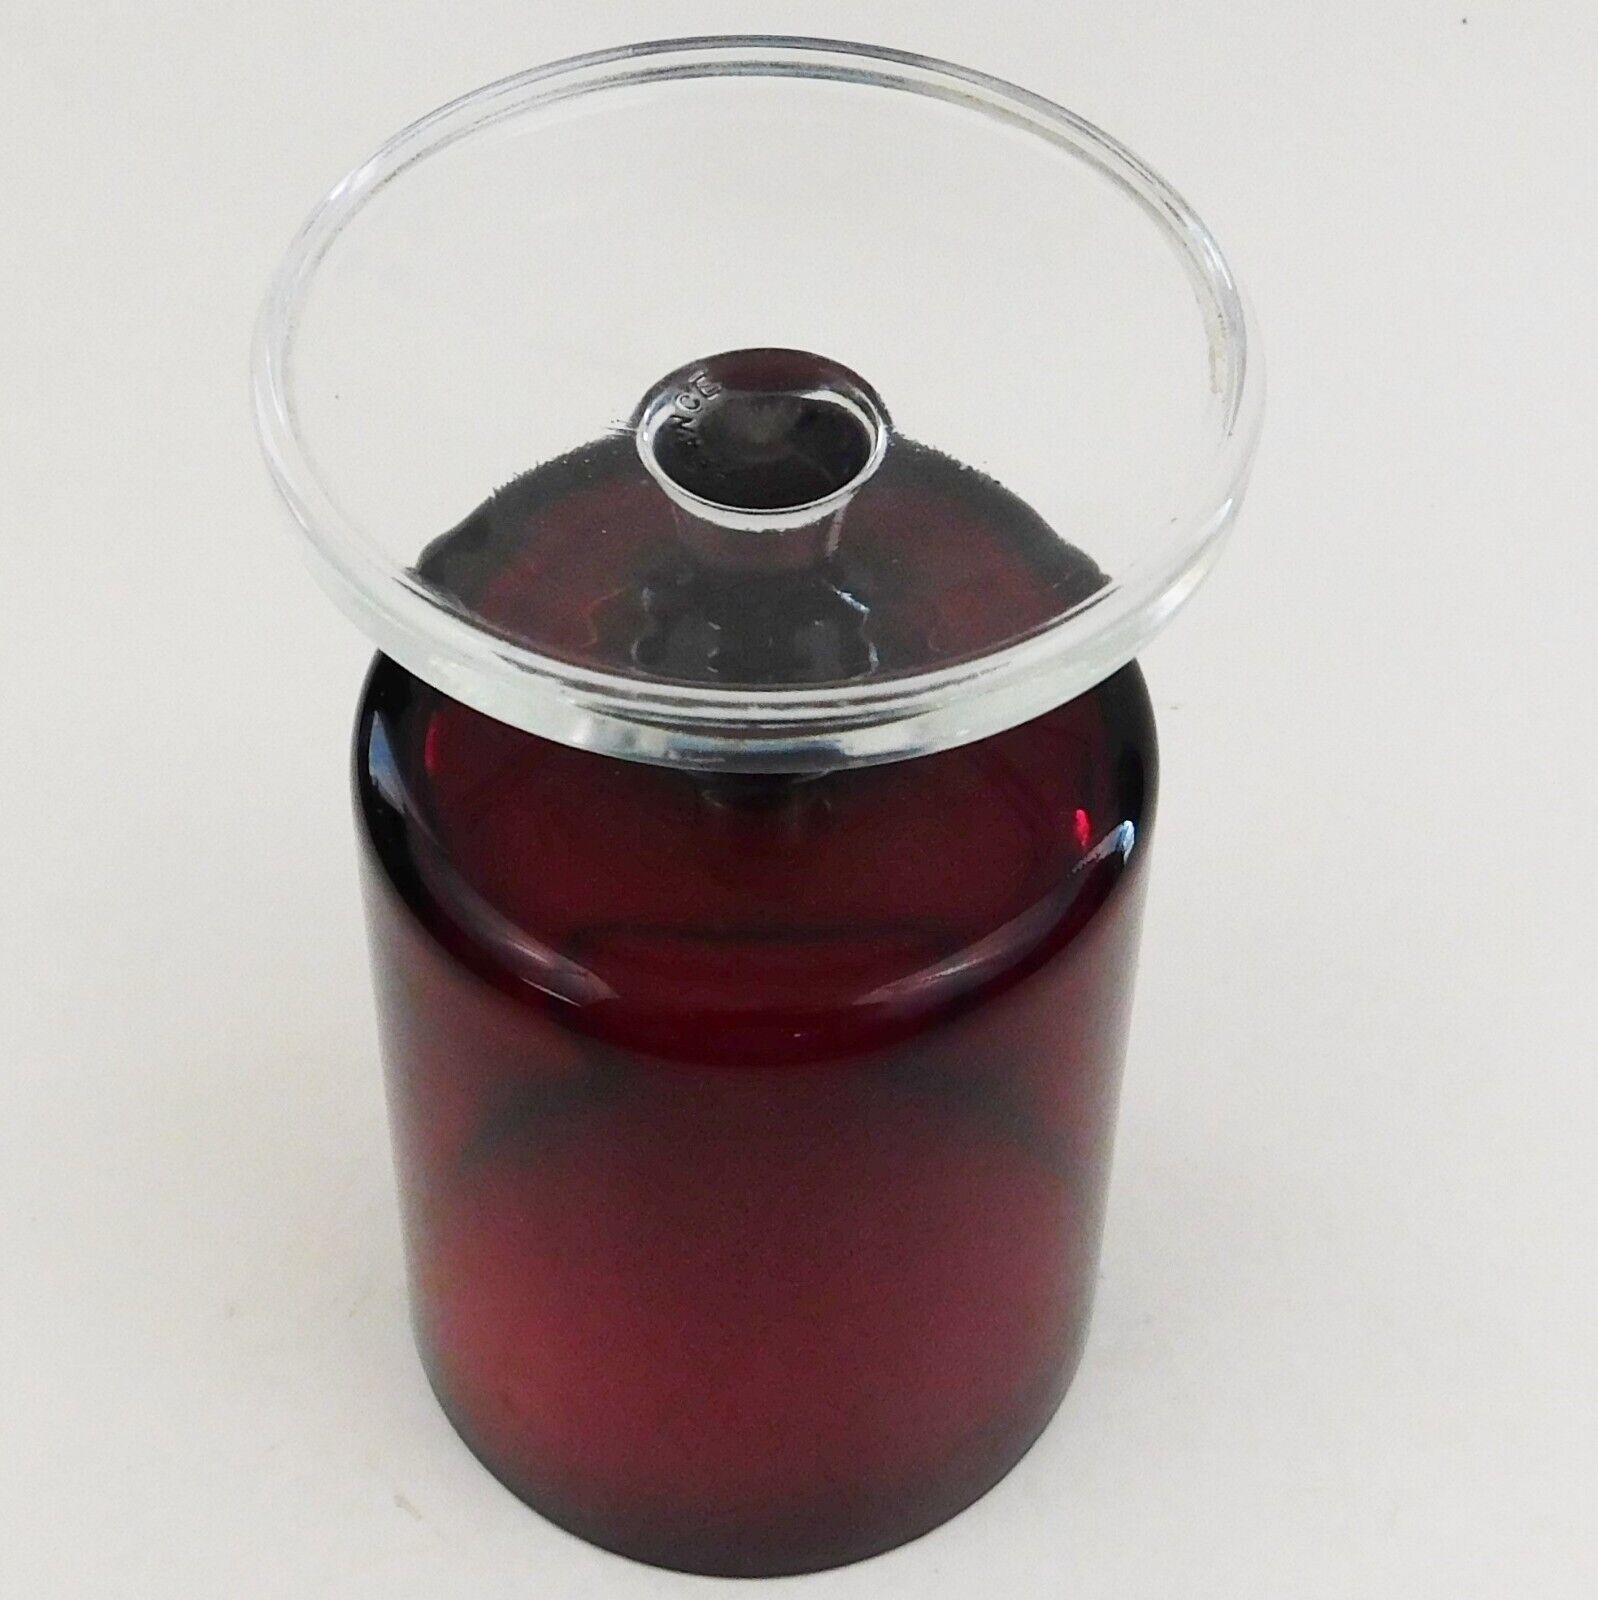 6 Vintage Ruby Red Stem Wine Glass Luminarc Christmas Holiday 